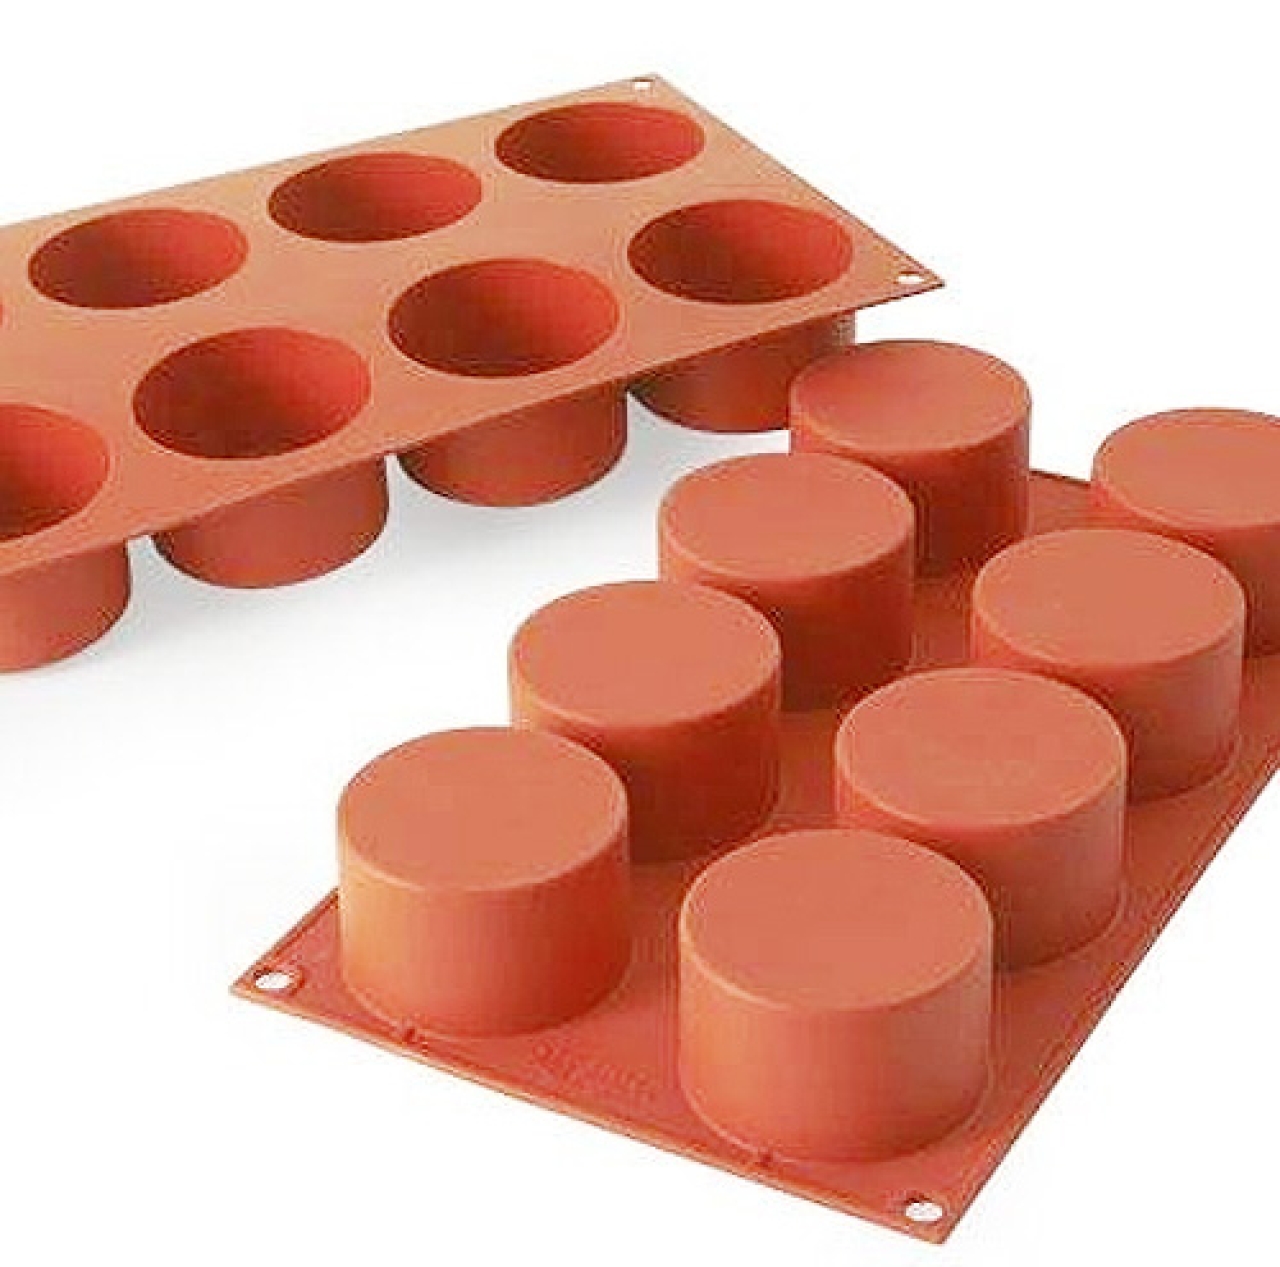 Silikomart Muffinform, extra tiefe Cupcakes, 8 Zylinder ca. 6 x 4 cm